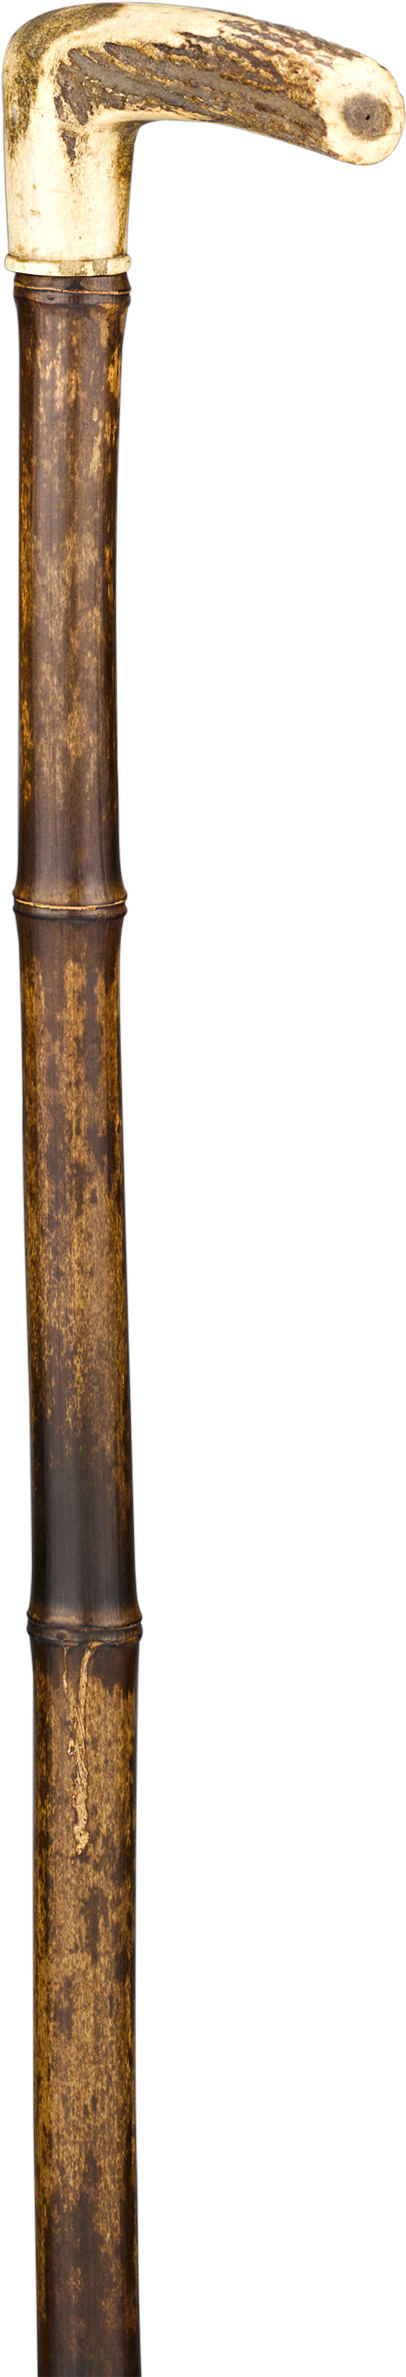 Antique Wooden Walking Stick PNG image